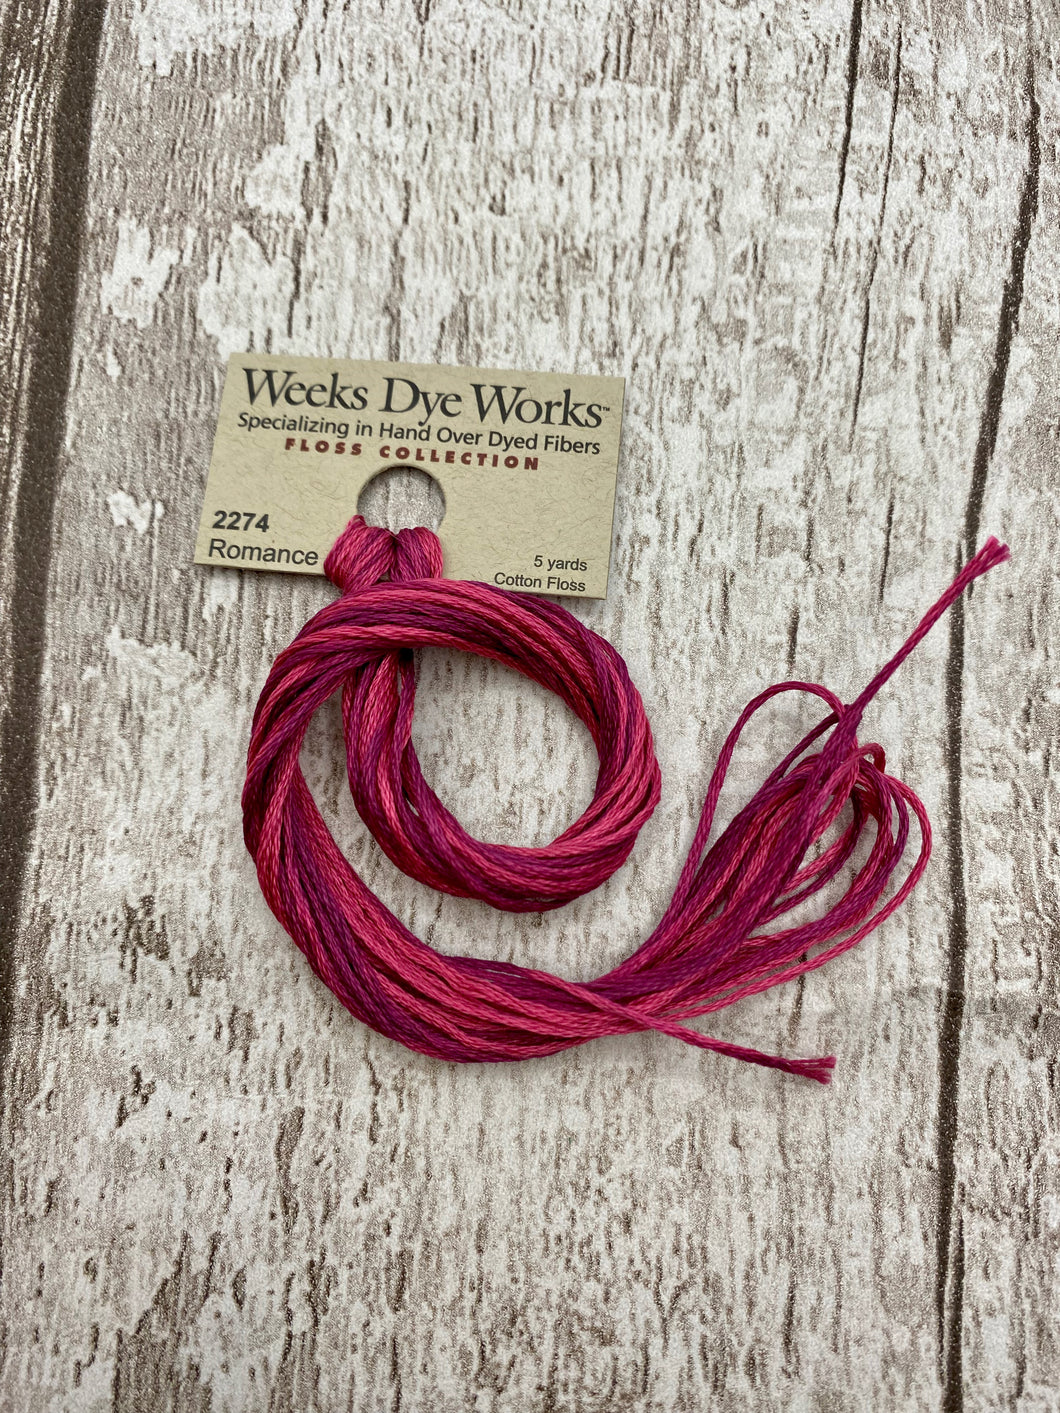 Romance (#2274), Weeks Dye Works 6-strand cotton floss